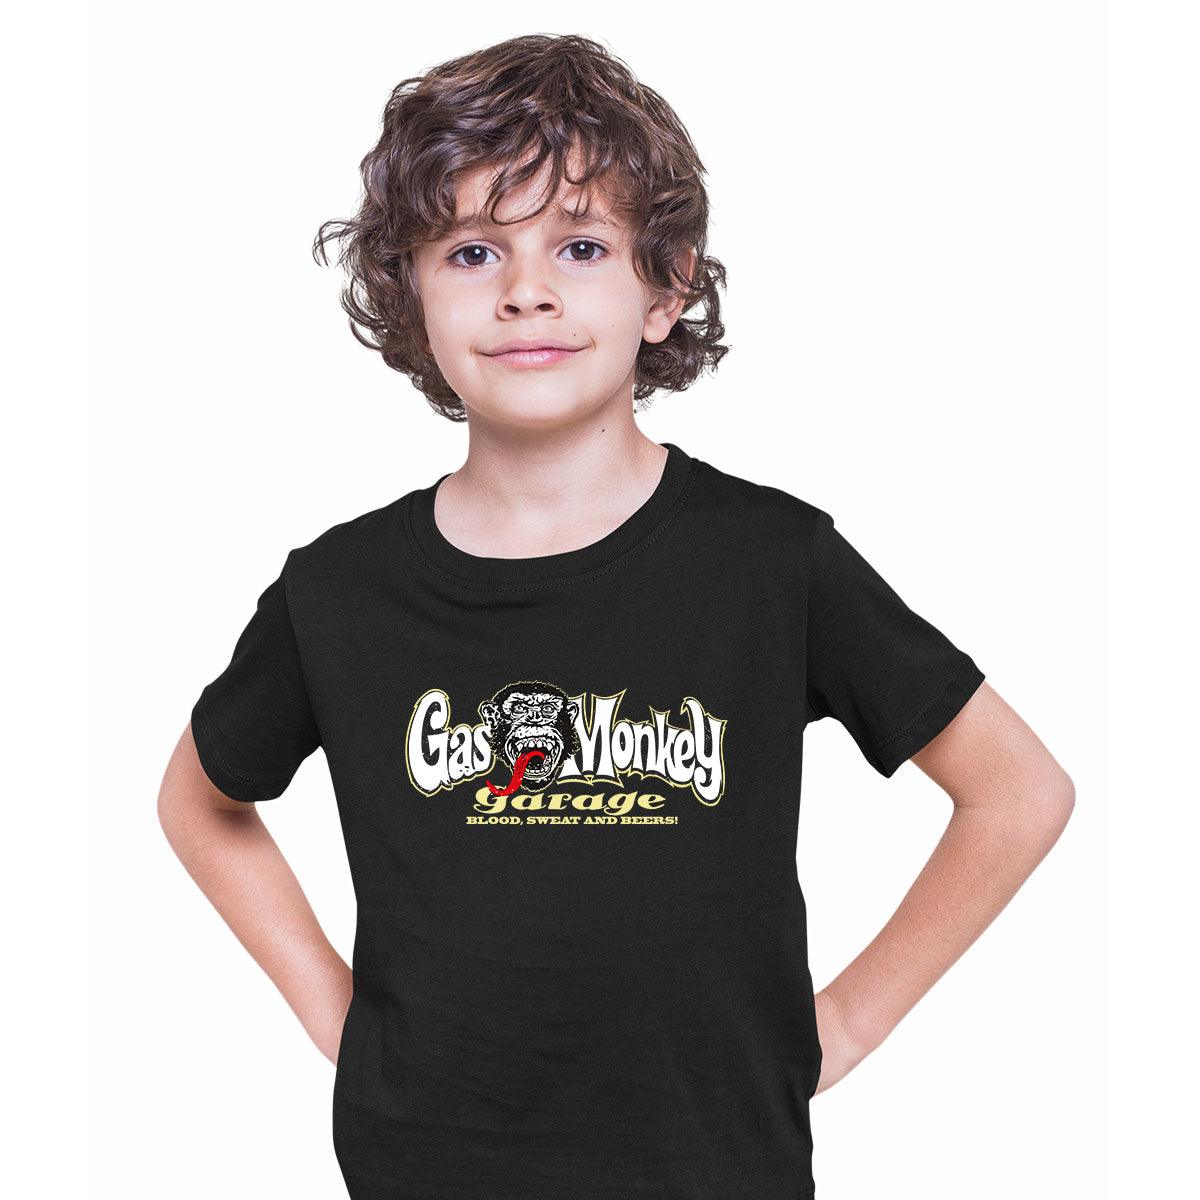 Gas Monkey Garage Kids Black T-shirt 9-11 years - Discounted - Kuzi Tees